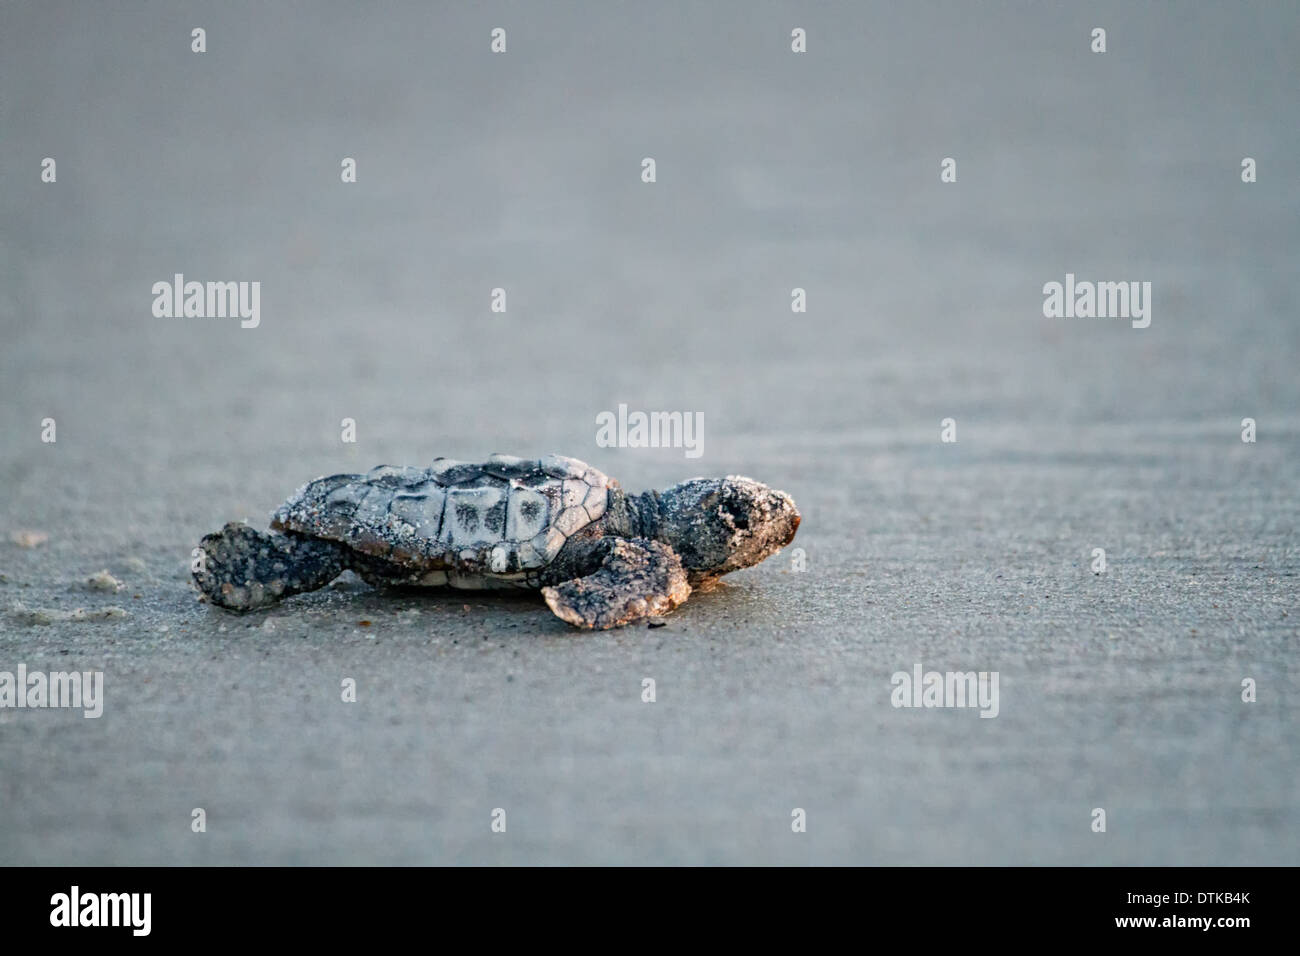 Baby Loggerhead Sea Turtle (Caretta caretta) on its way to the ocean. Taken on Amelia Island in Florida. Stock Photo